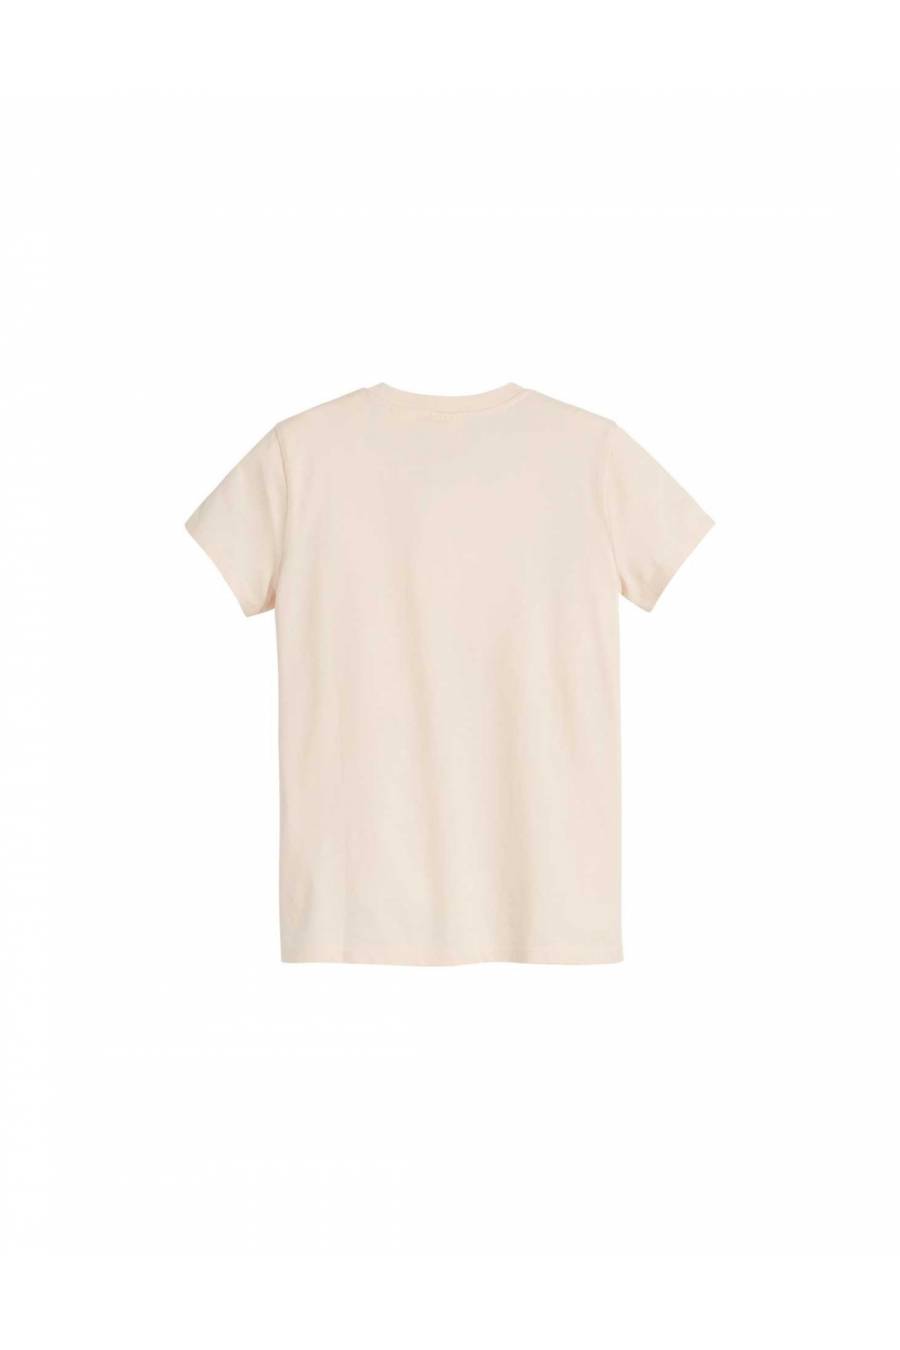 Camiseta Levi's Perfect Tee Peach 39185-0165